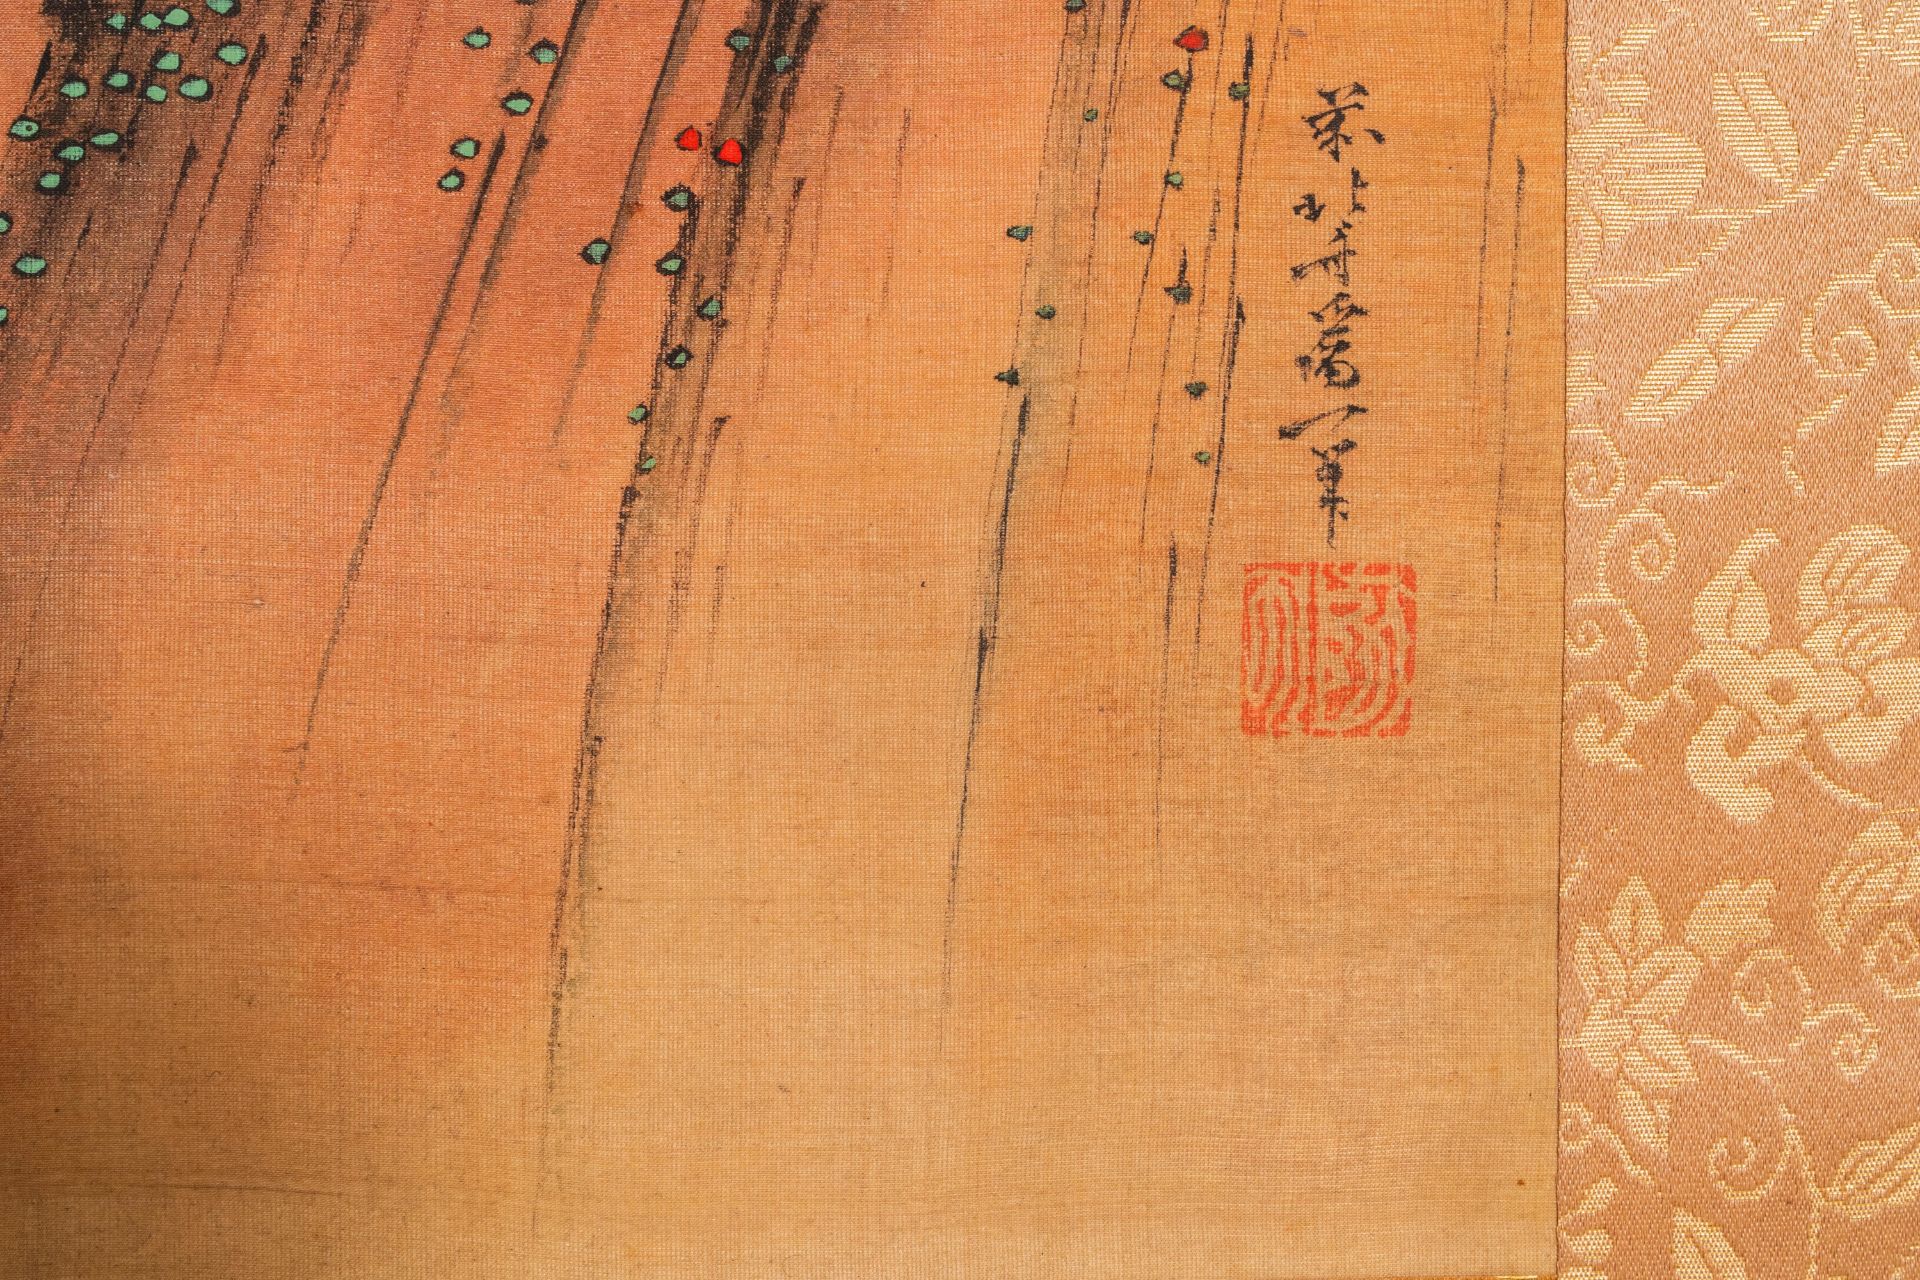 Katsushika Hokusai (Japan, 1760 - 1849), ink and color on silk: Ryubi jumping his horse across a str - Image 6 of 31